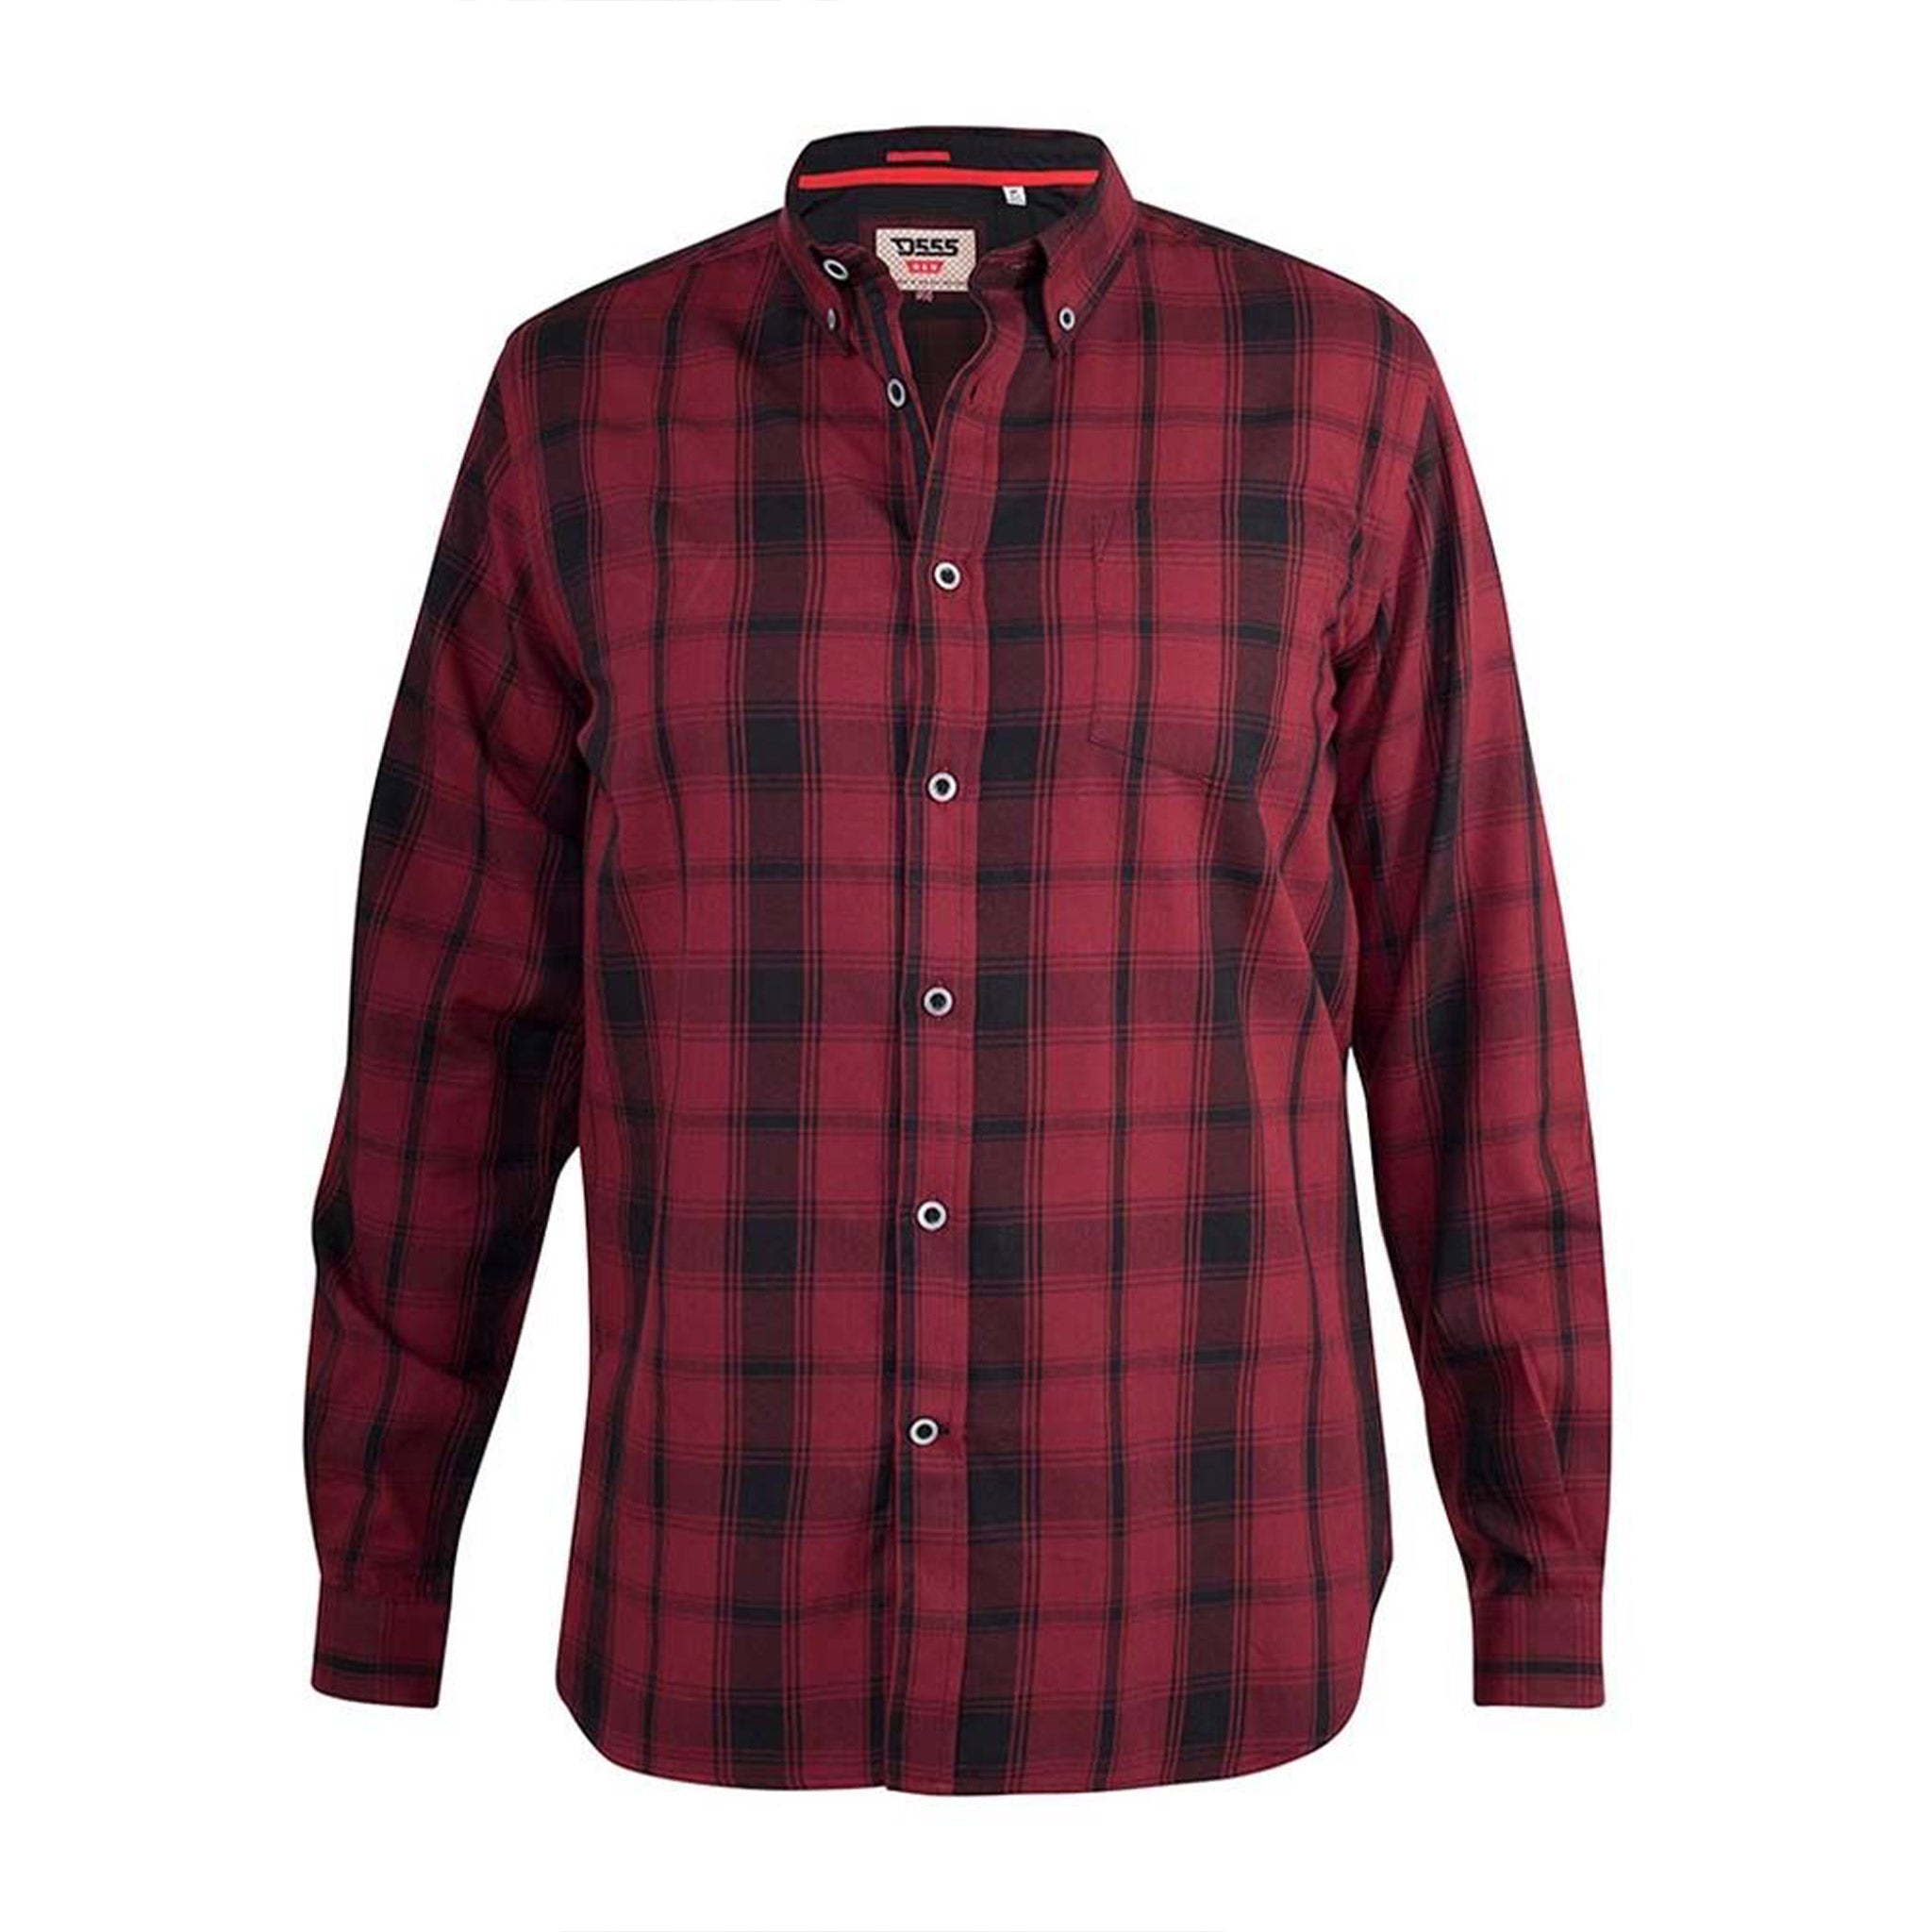 D555 Check Shirt - Benalla Red/Black